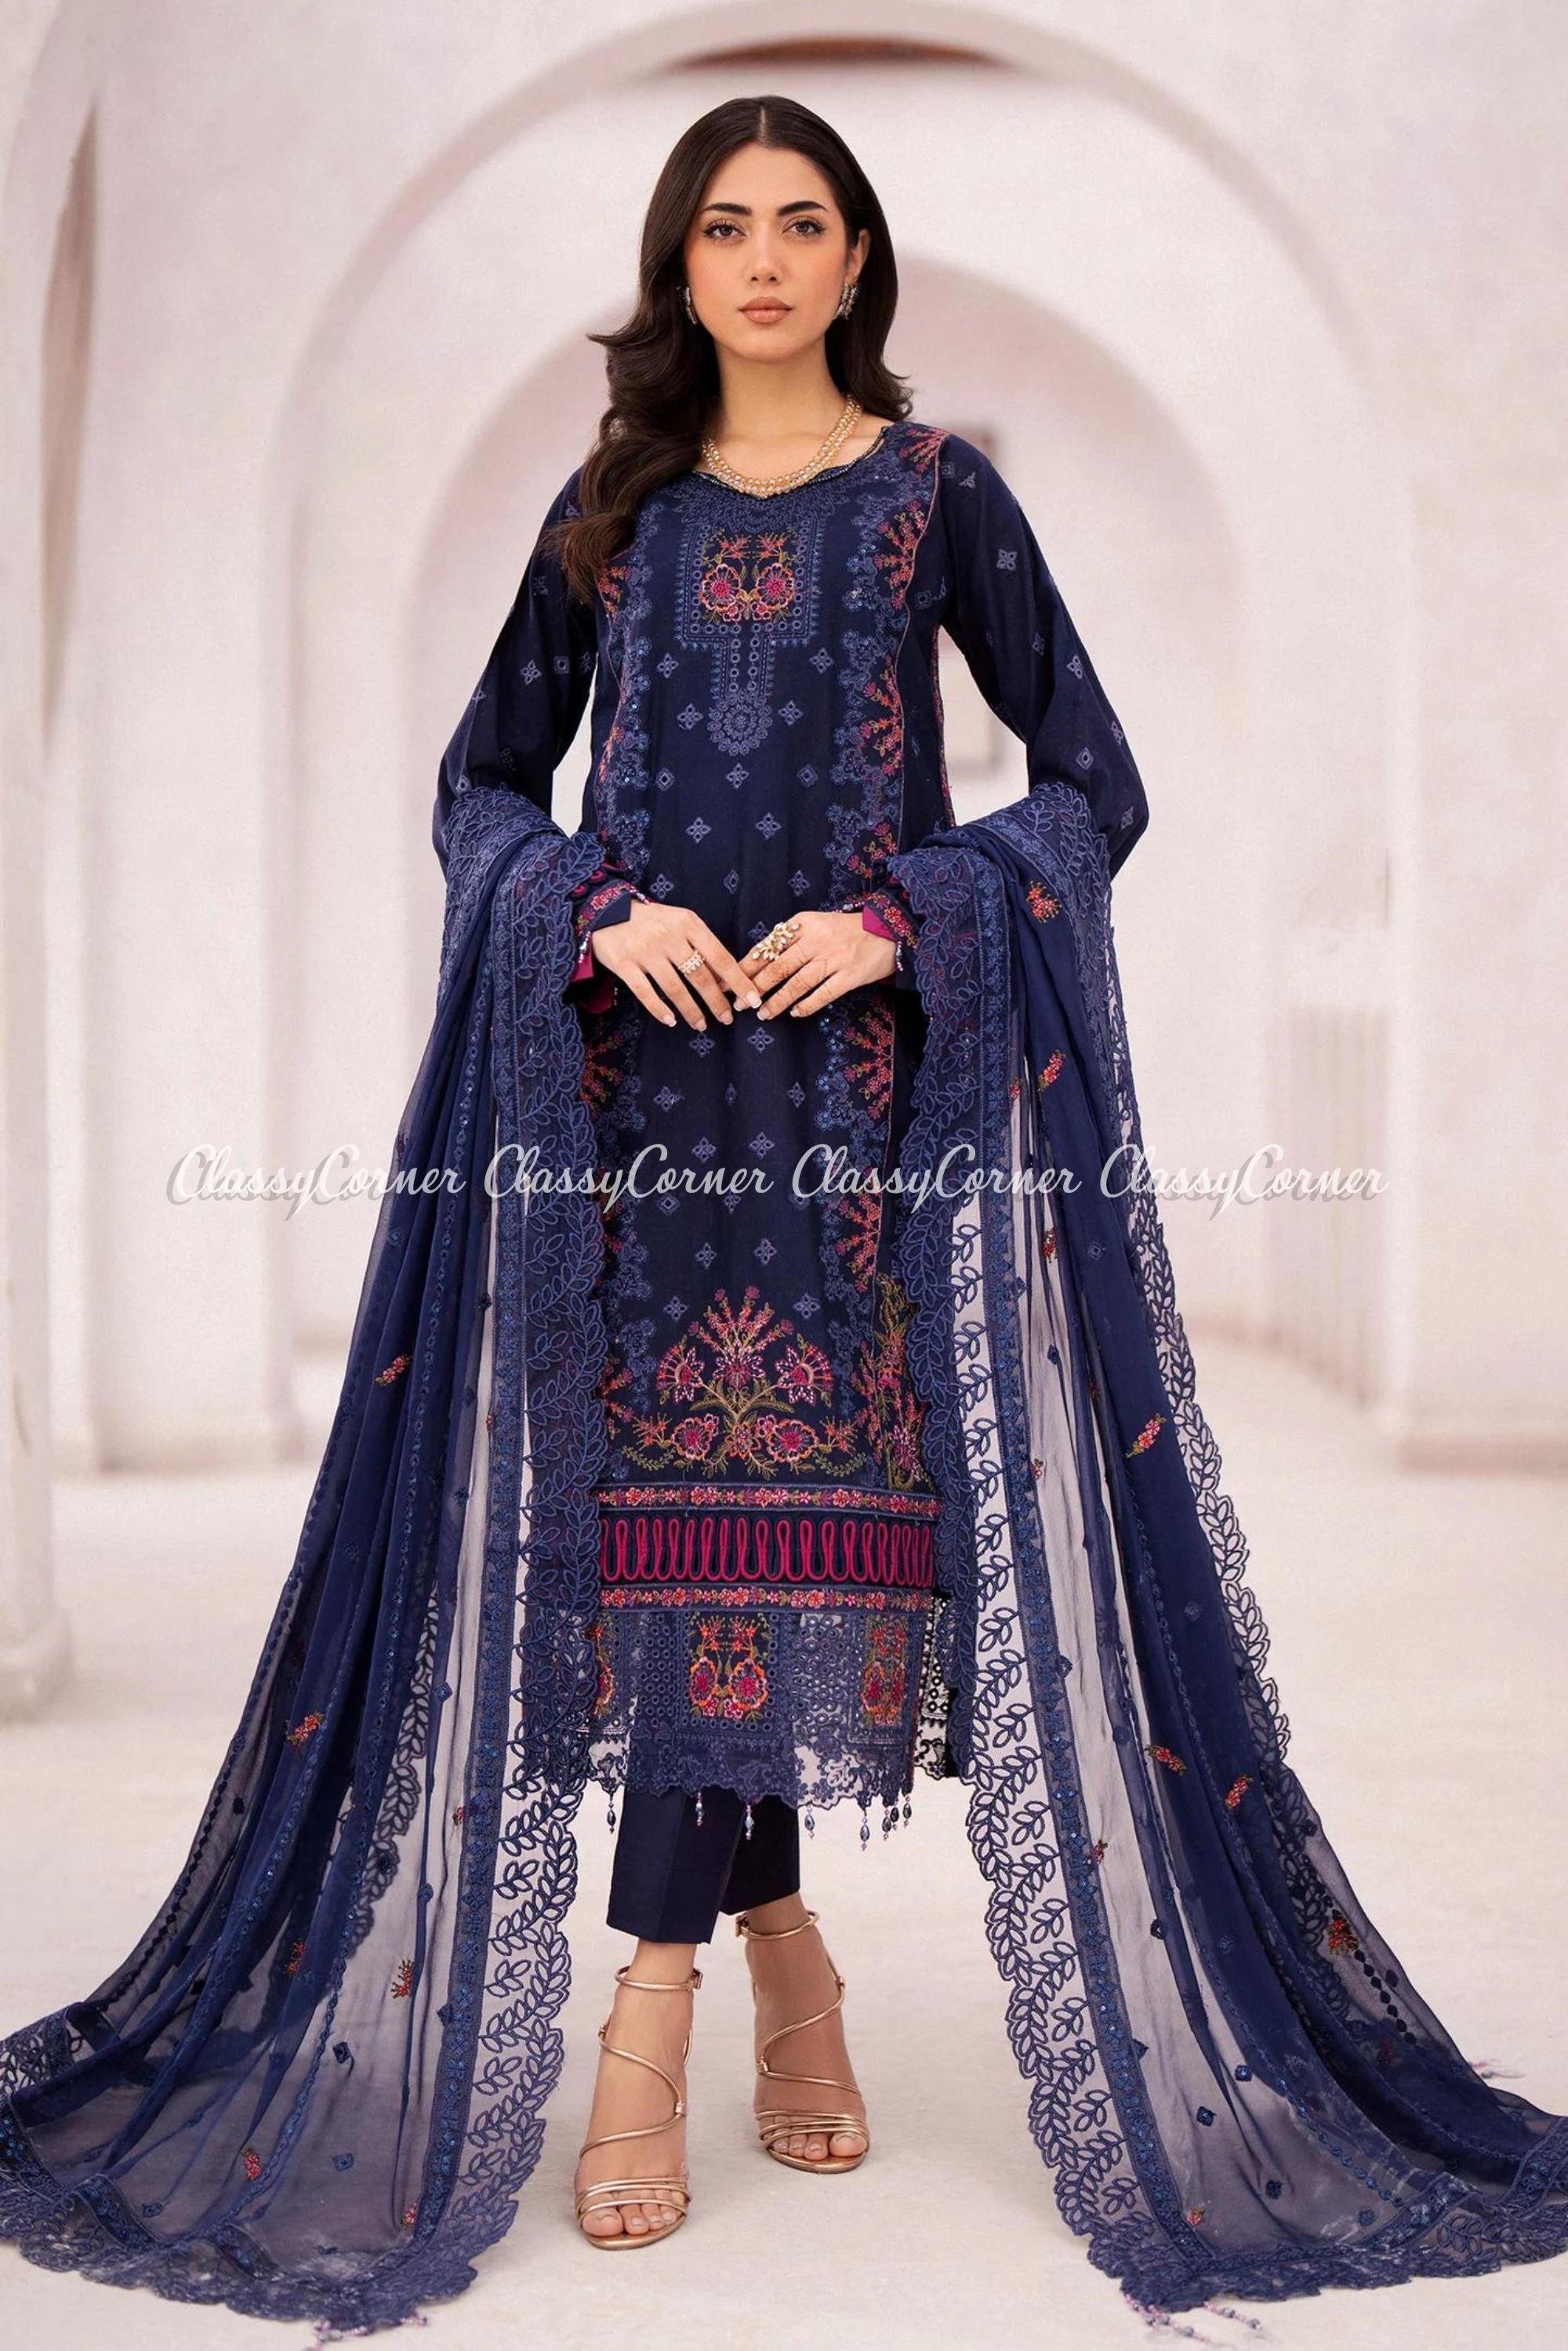 Pakistani Formal Wedding Garments For Women